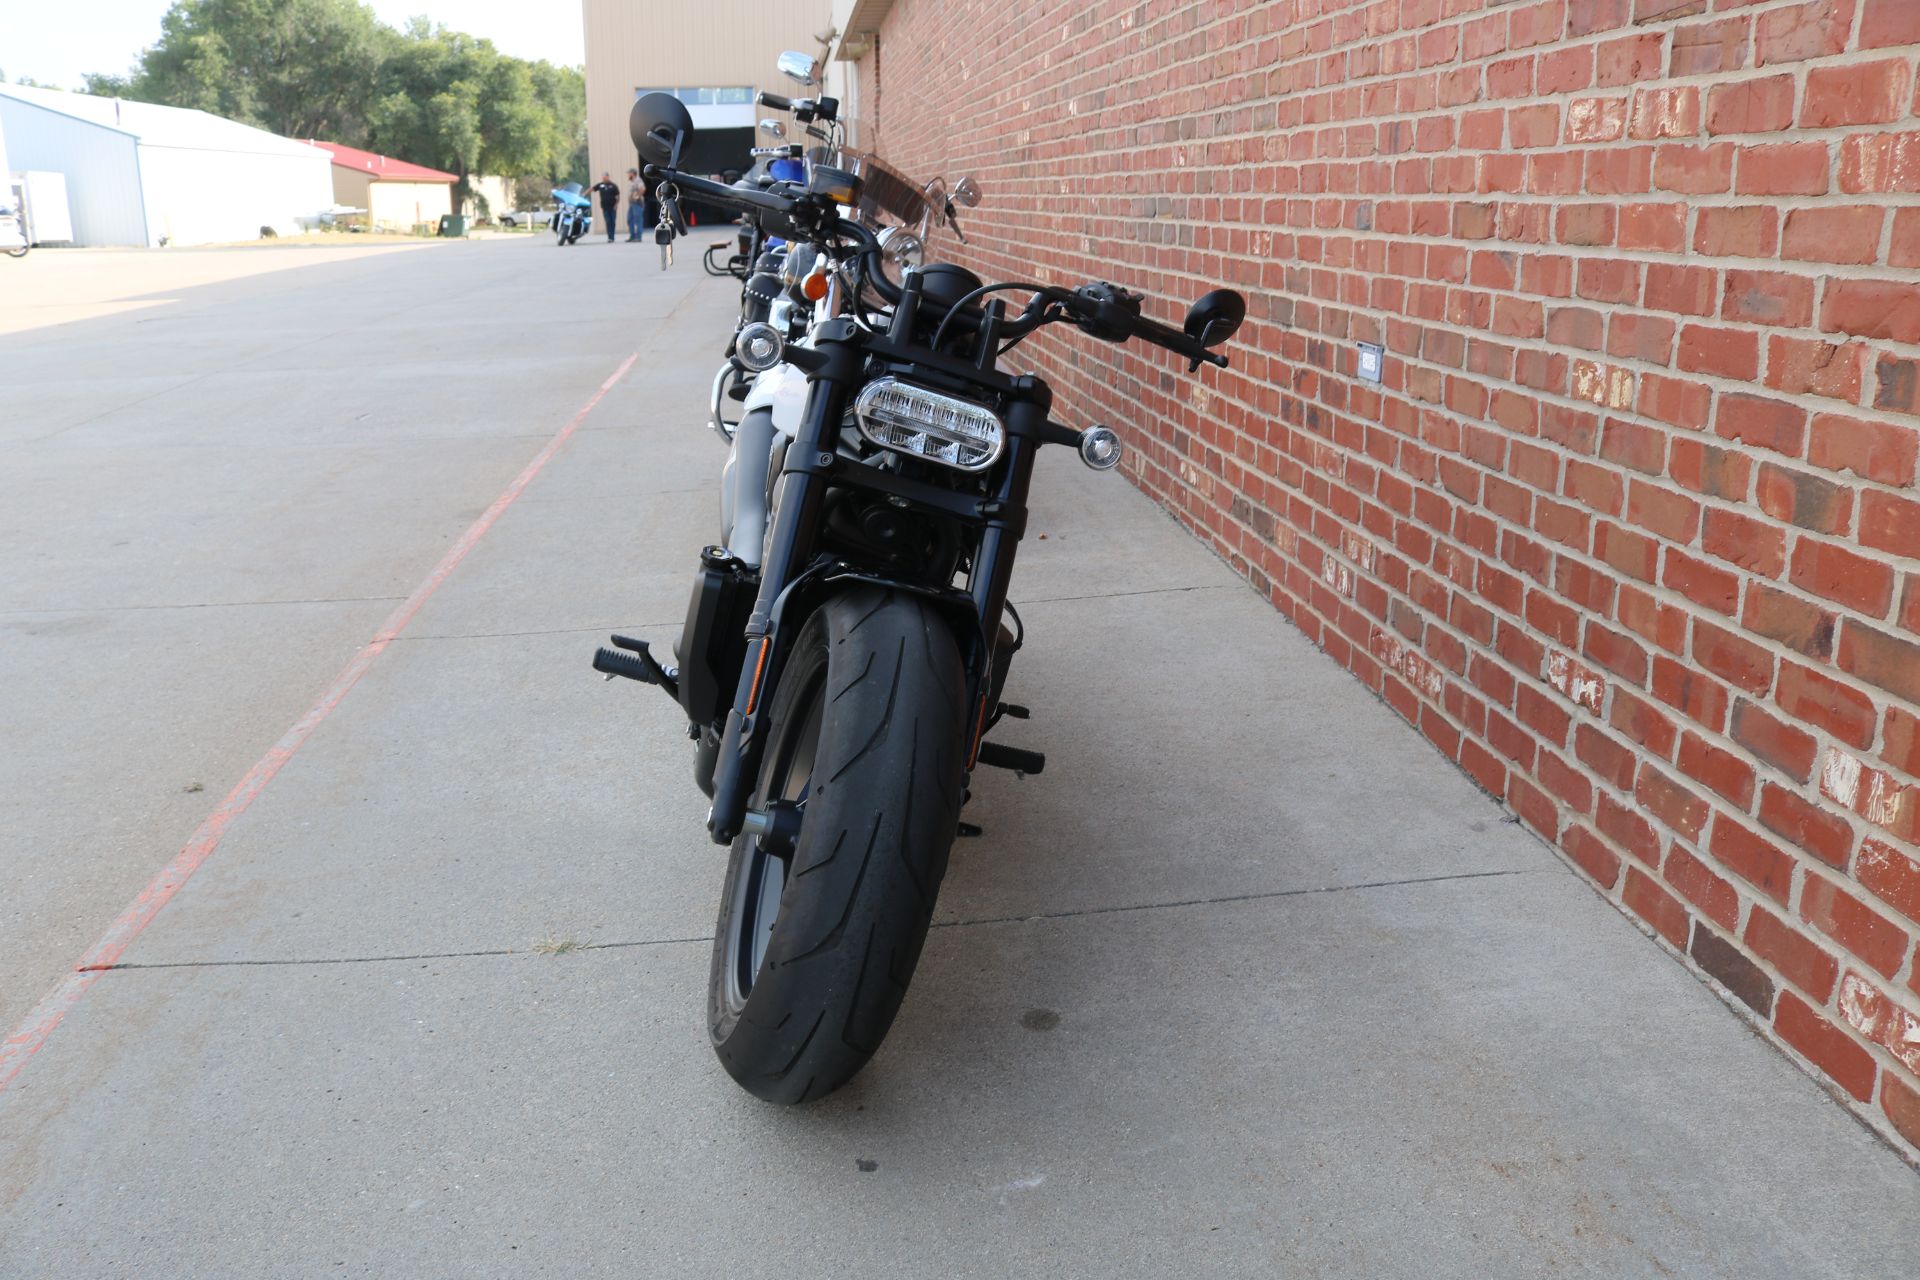 2021 Harley-Davidson Sportster® S in Ames, Iowa - Photo 6